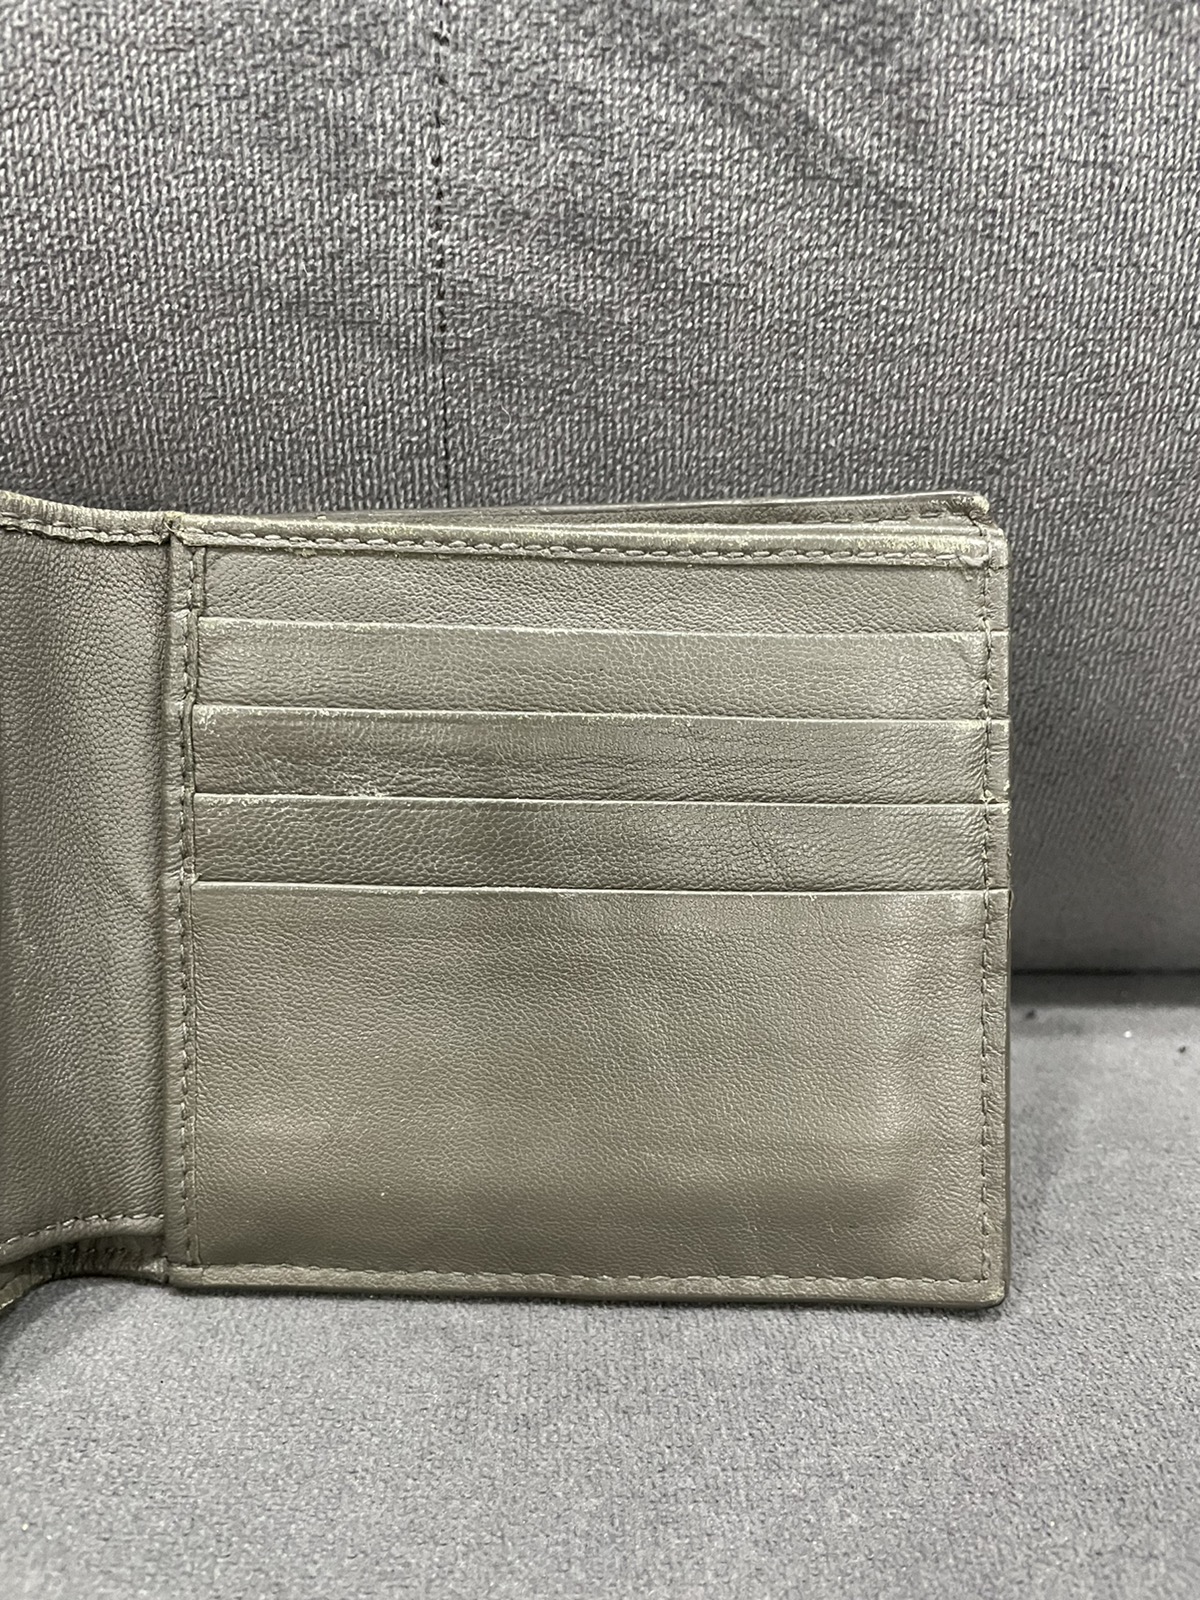 Authentic BOTTEGA VENETA MEN’S Green Leather Wallet - 3